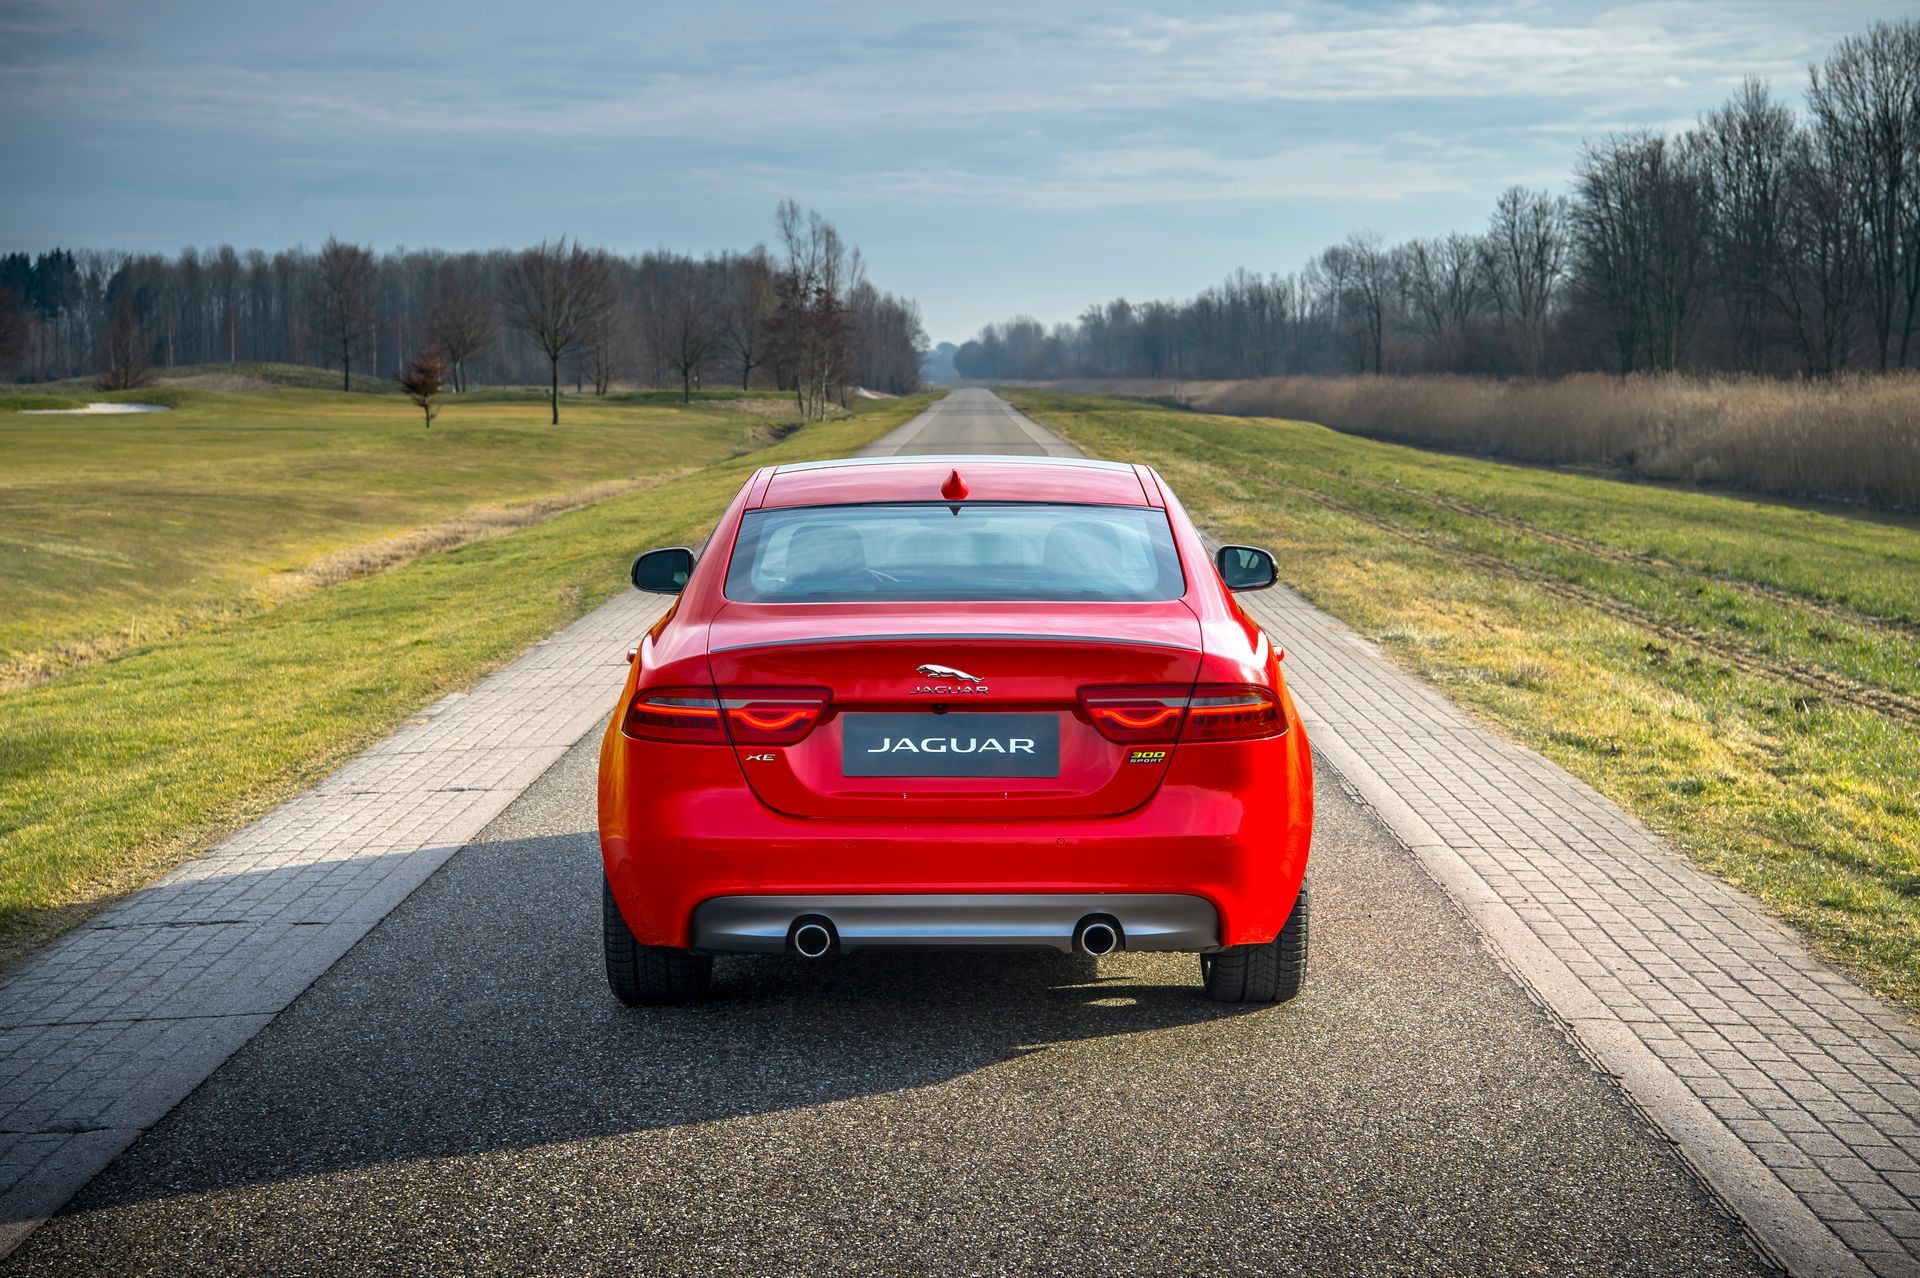  Jaguar  XE  Body Chassis Use 75  Percent Aluminum 